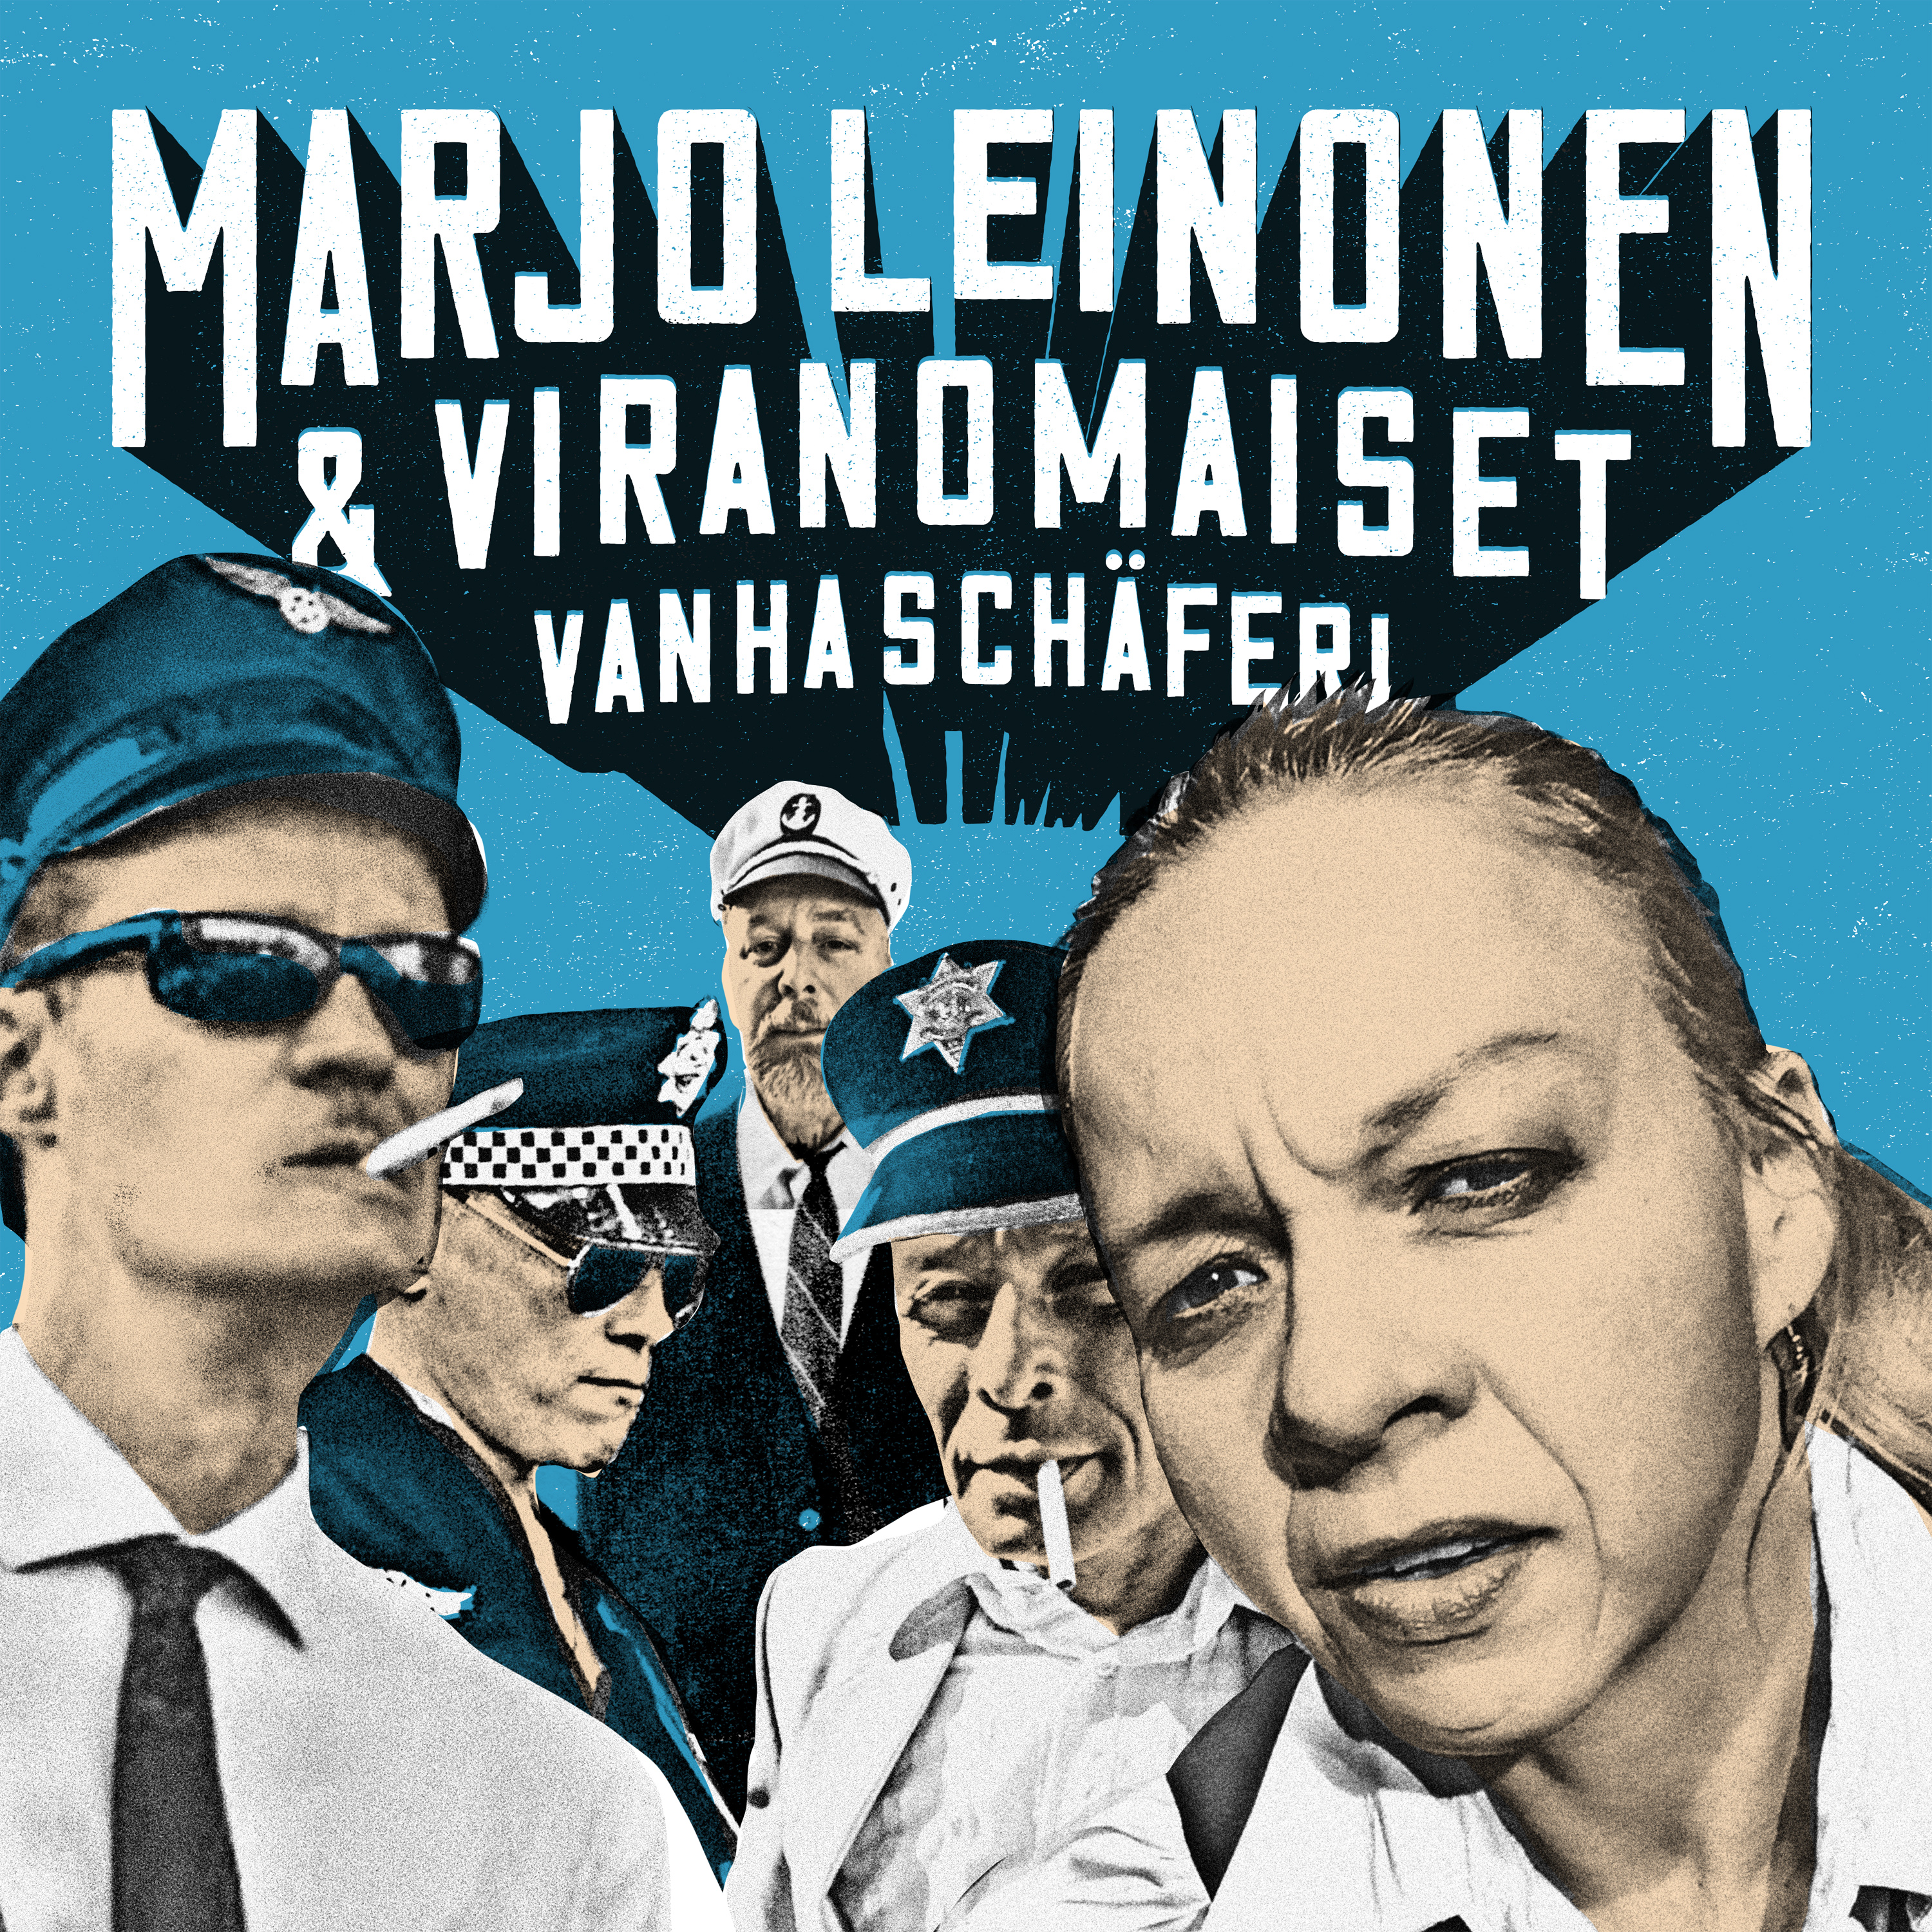 Marjo Leinonen & Viranomaiset - Vanha Sch feri